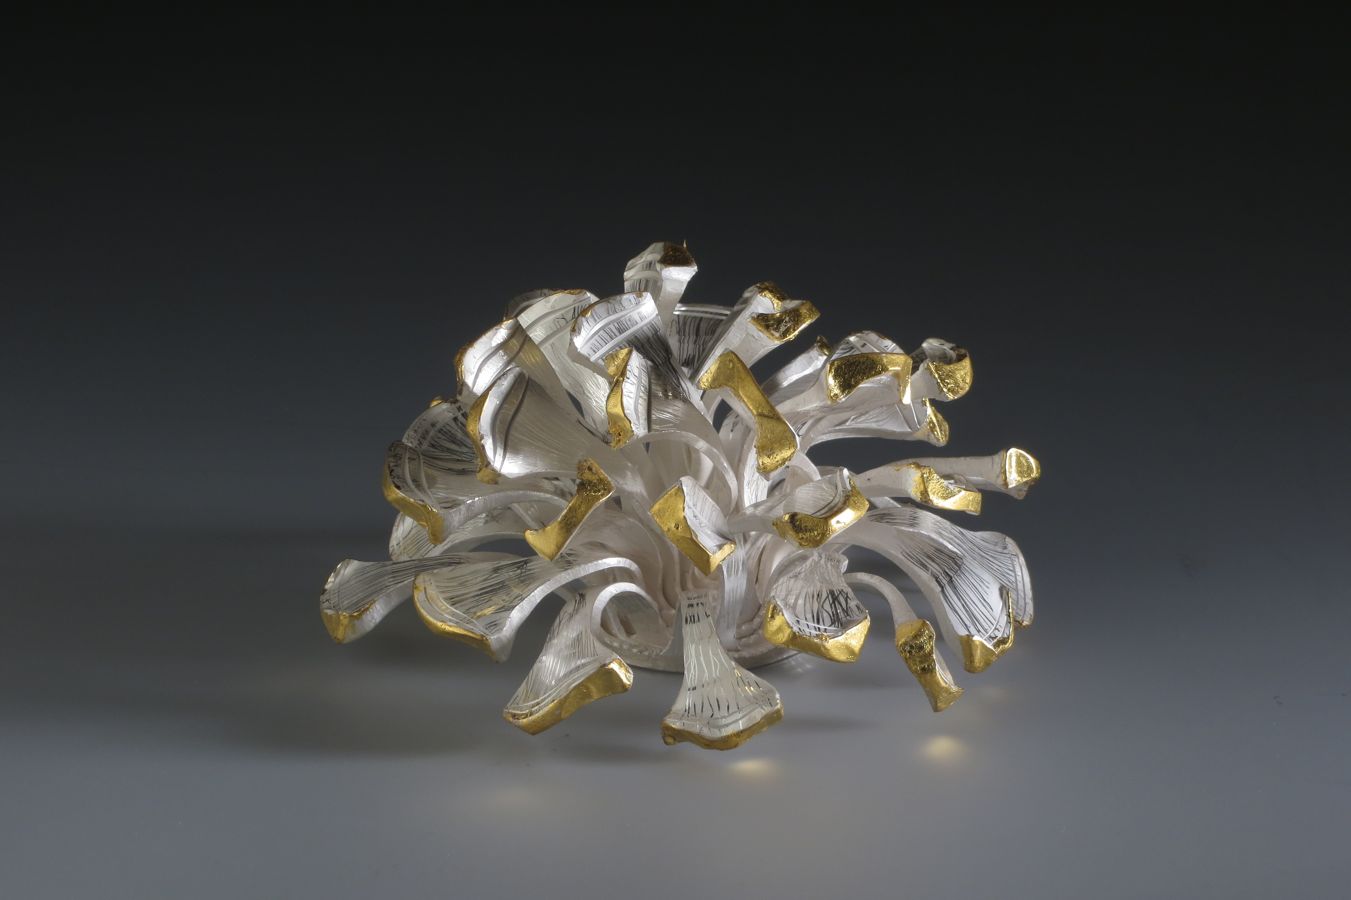 Piece -- materials: silver, gold leaf; dimensions: diameter 10, h 6 cm;